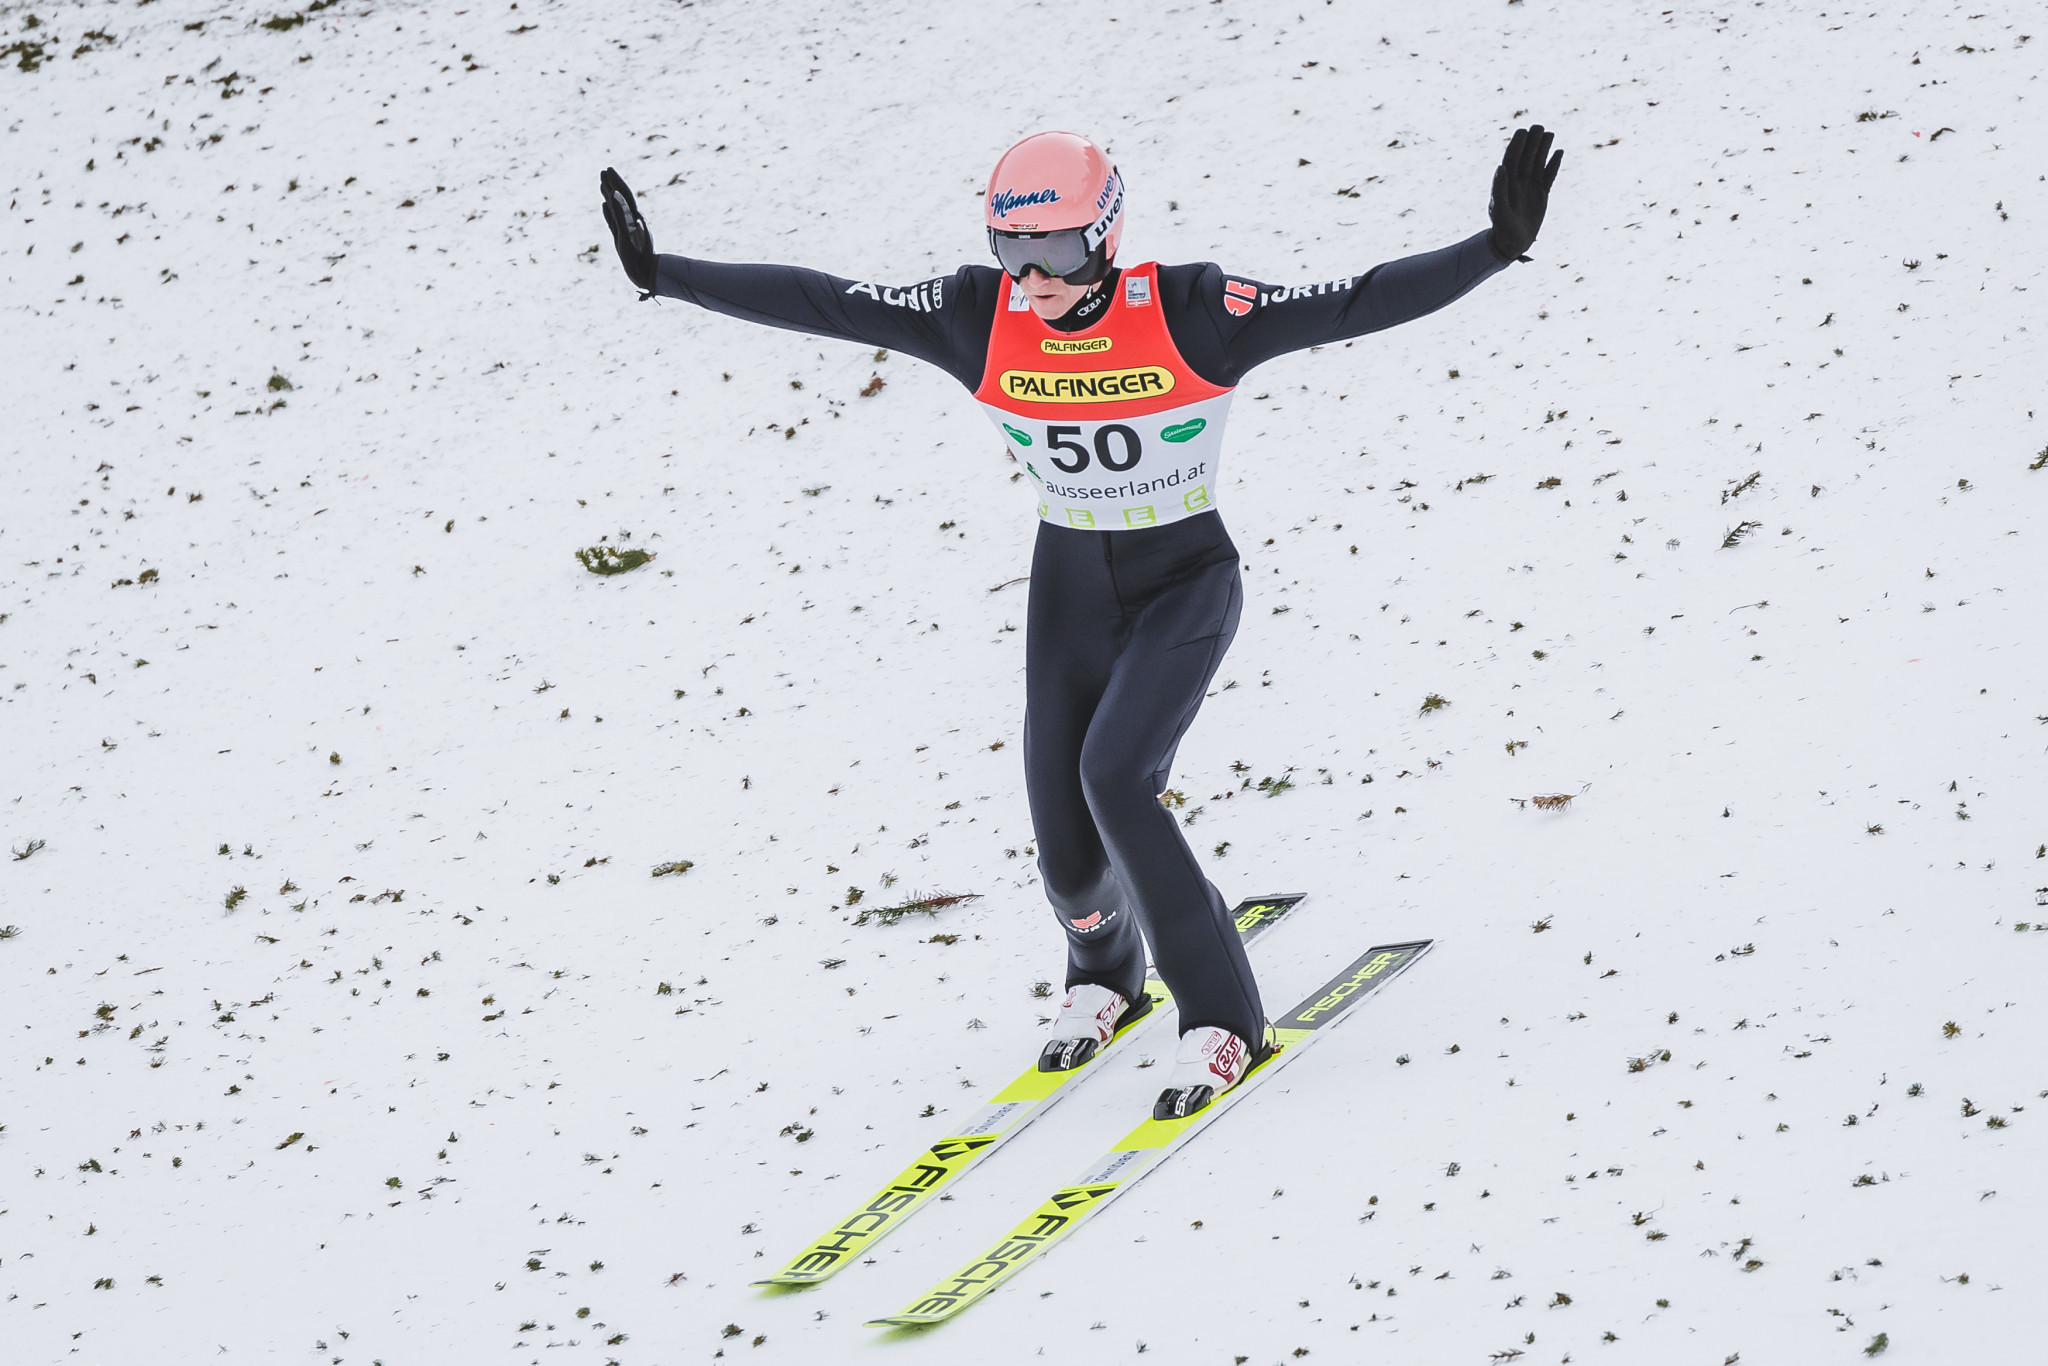 Geiger grabs third Ski Jumping World Cup win of season in Râșnov